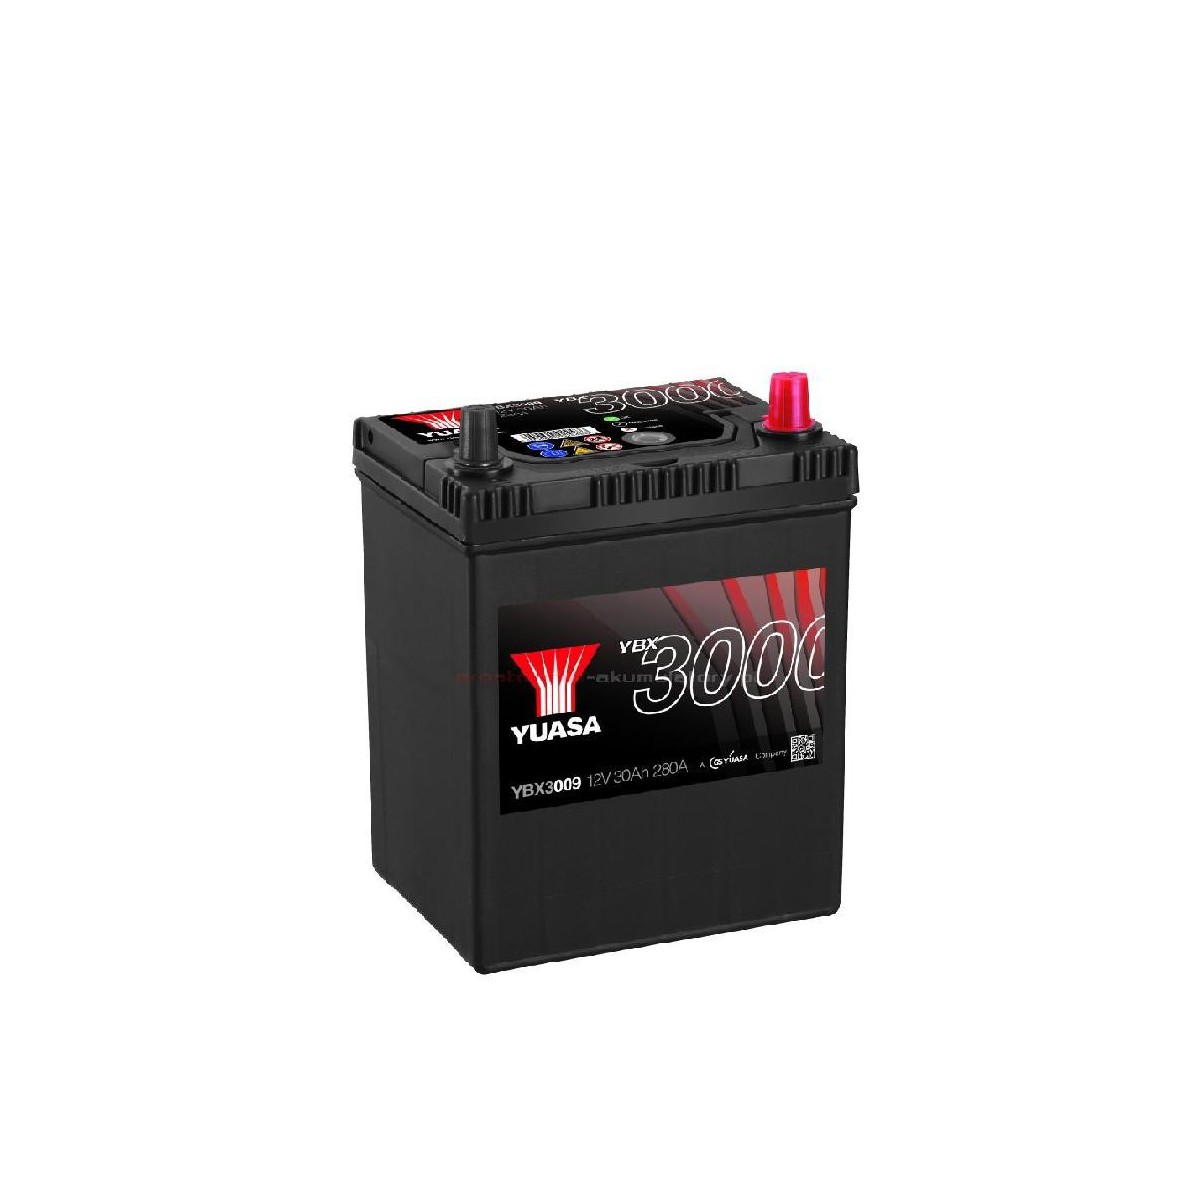 YUASA YBX3009 battery